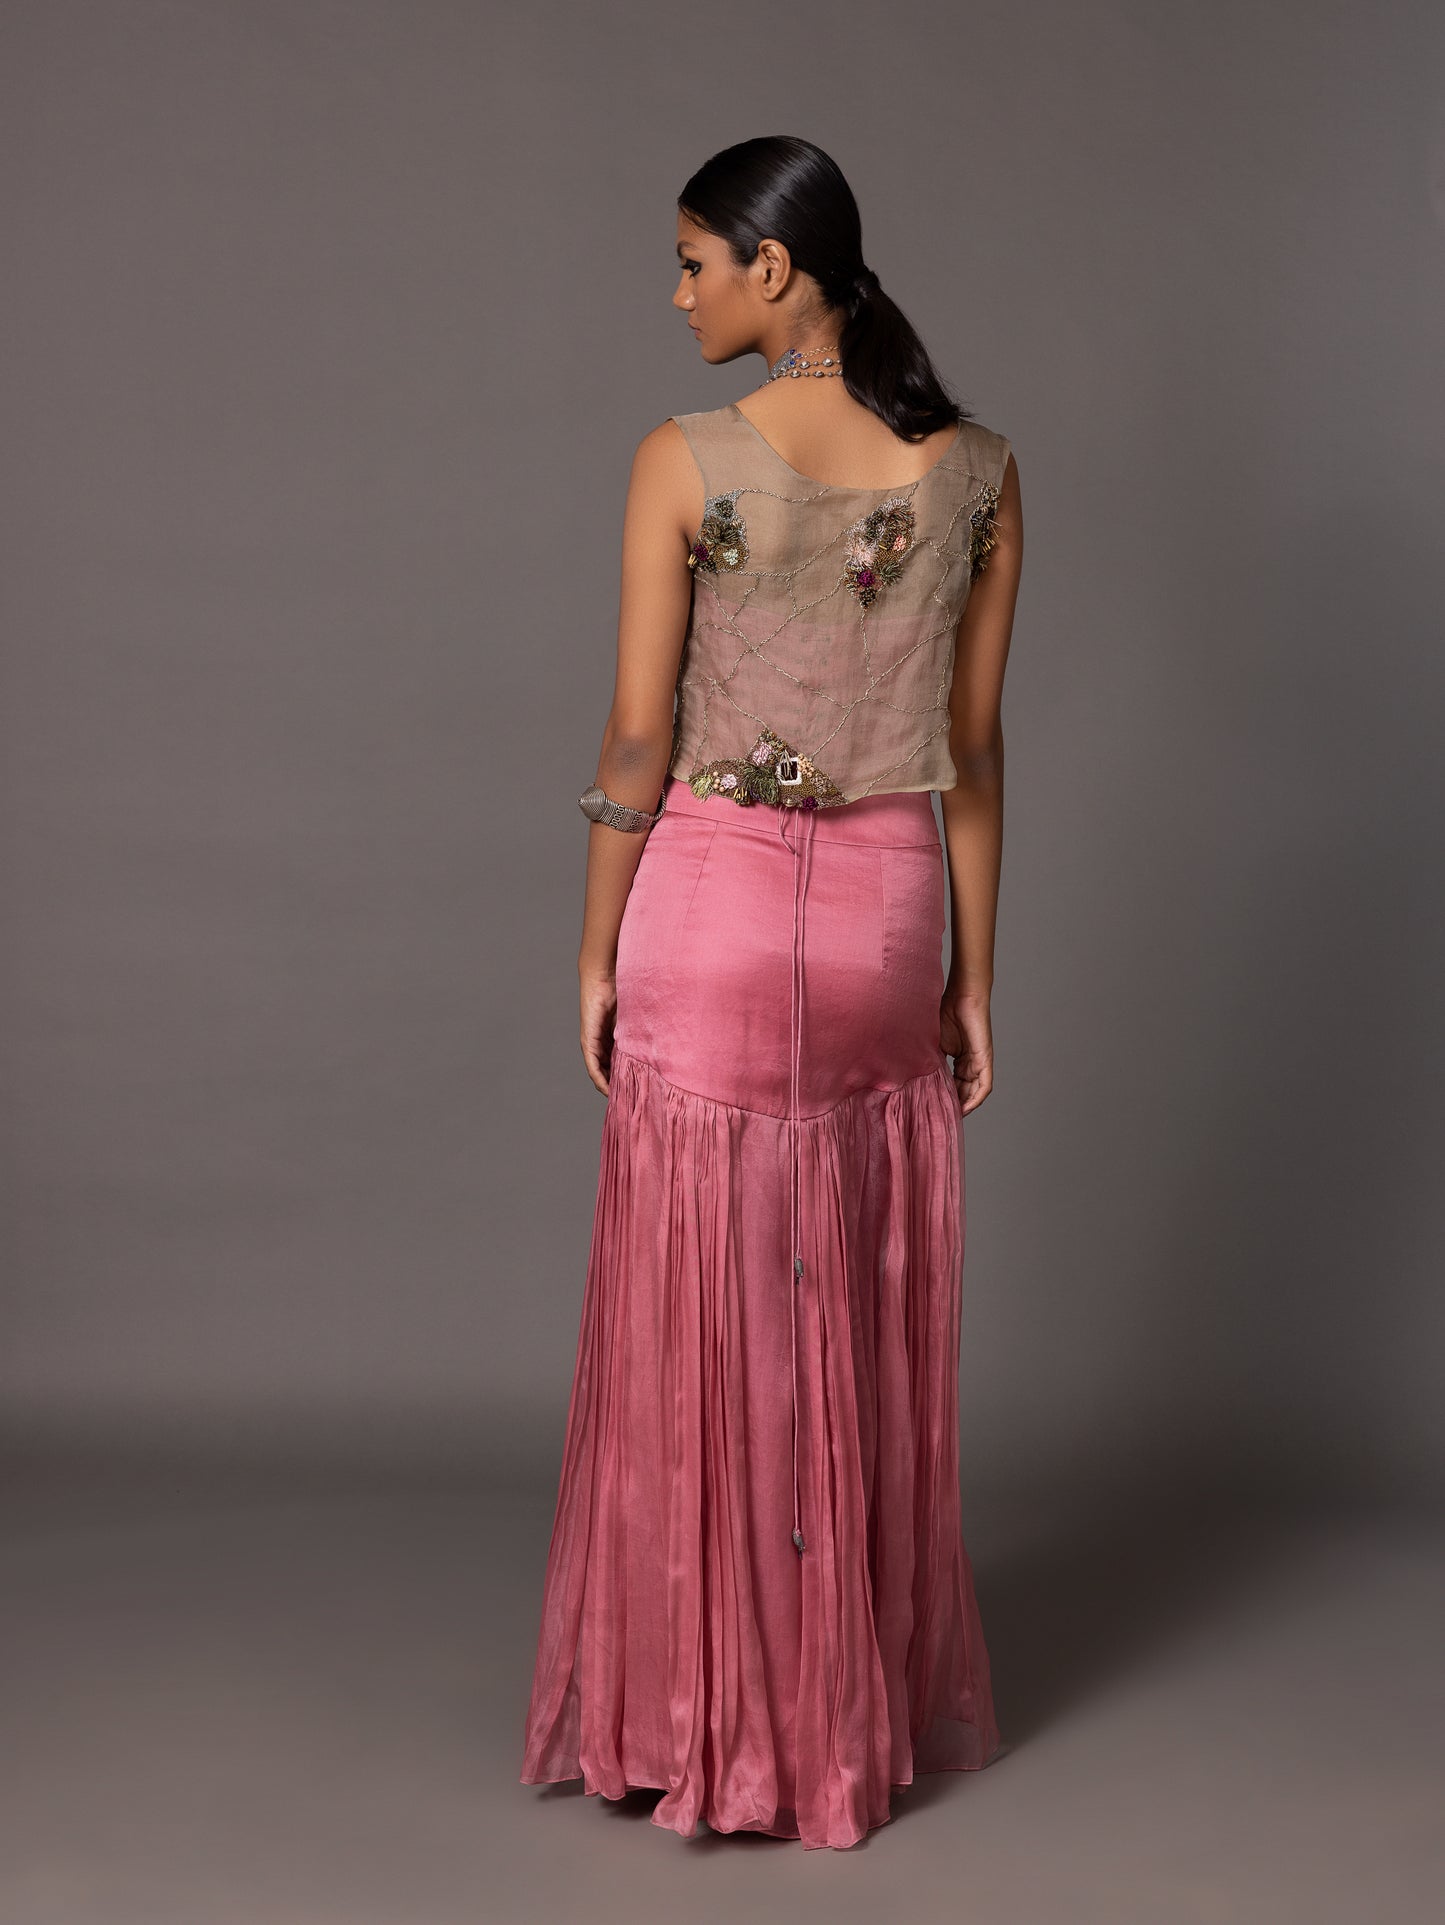 Kaner Pink Corset And Skirt Set With Mesa Jacket